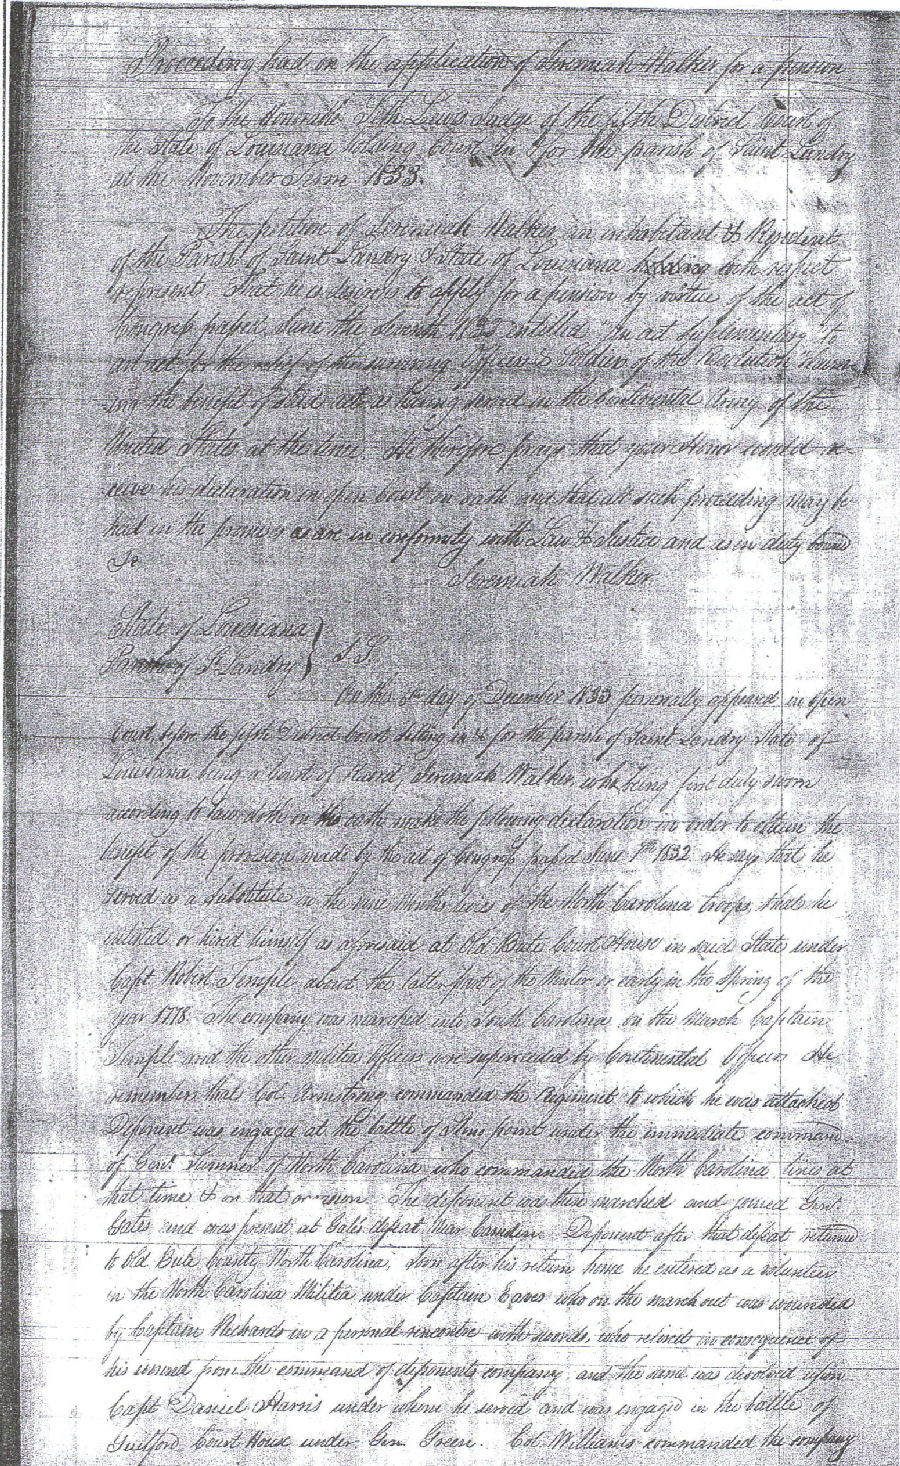 Jeremiah Walker Pension Request - 1833 - 3